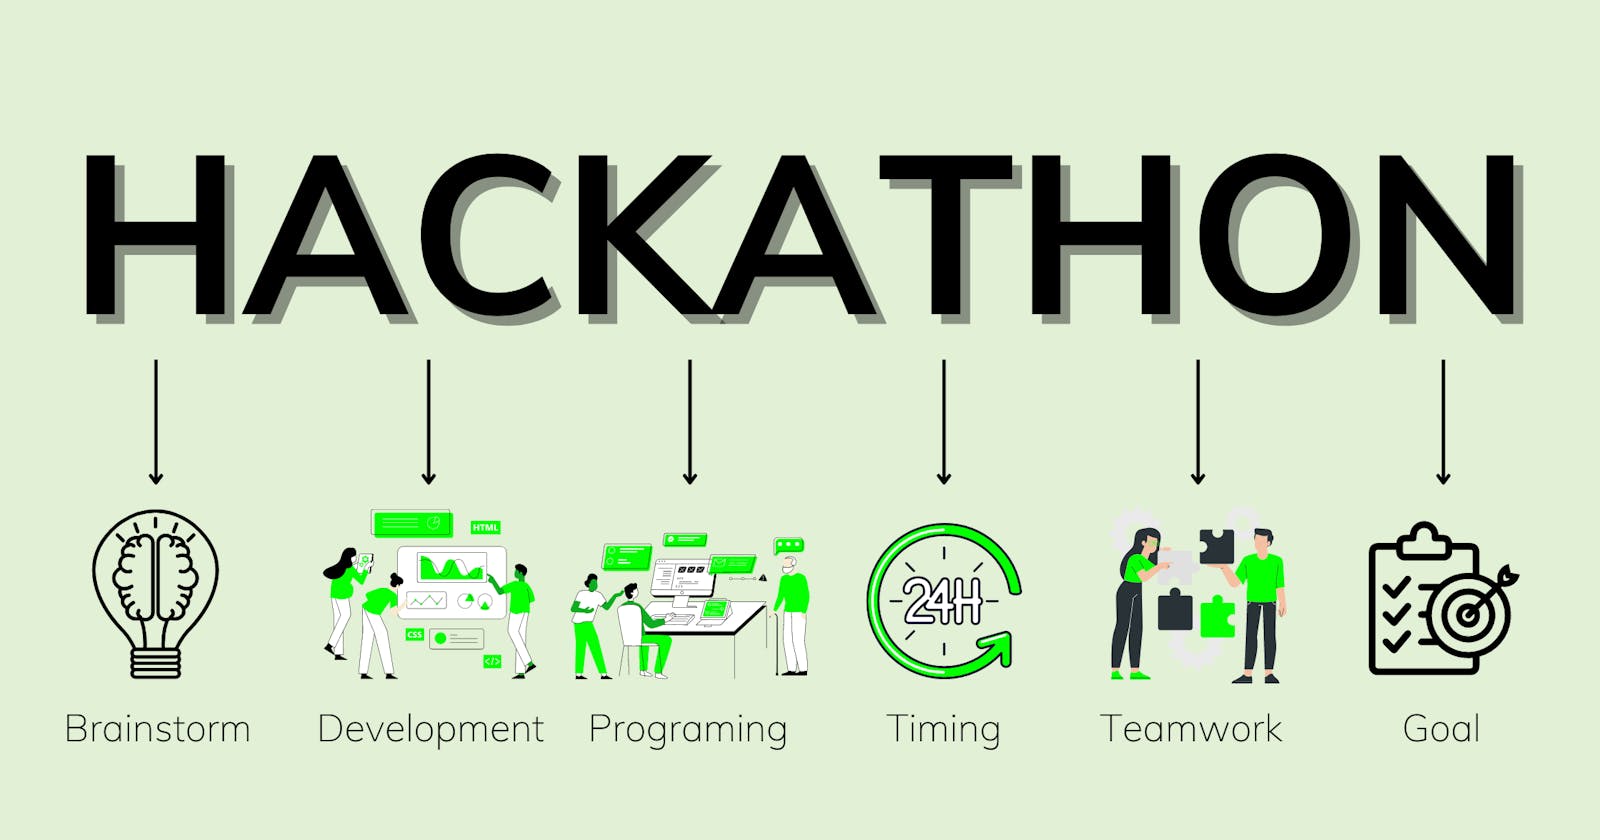 What Is Hackathon?